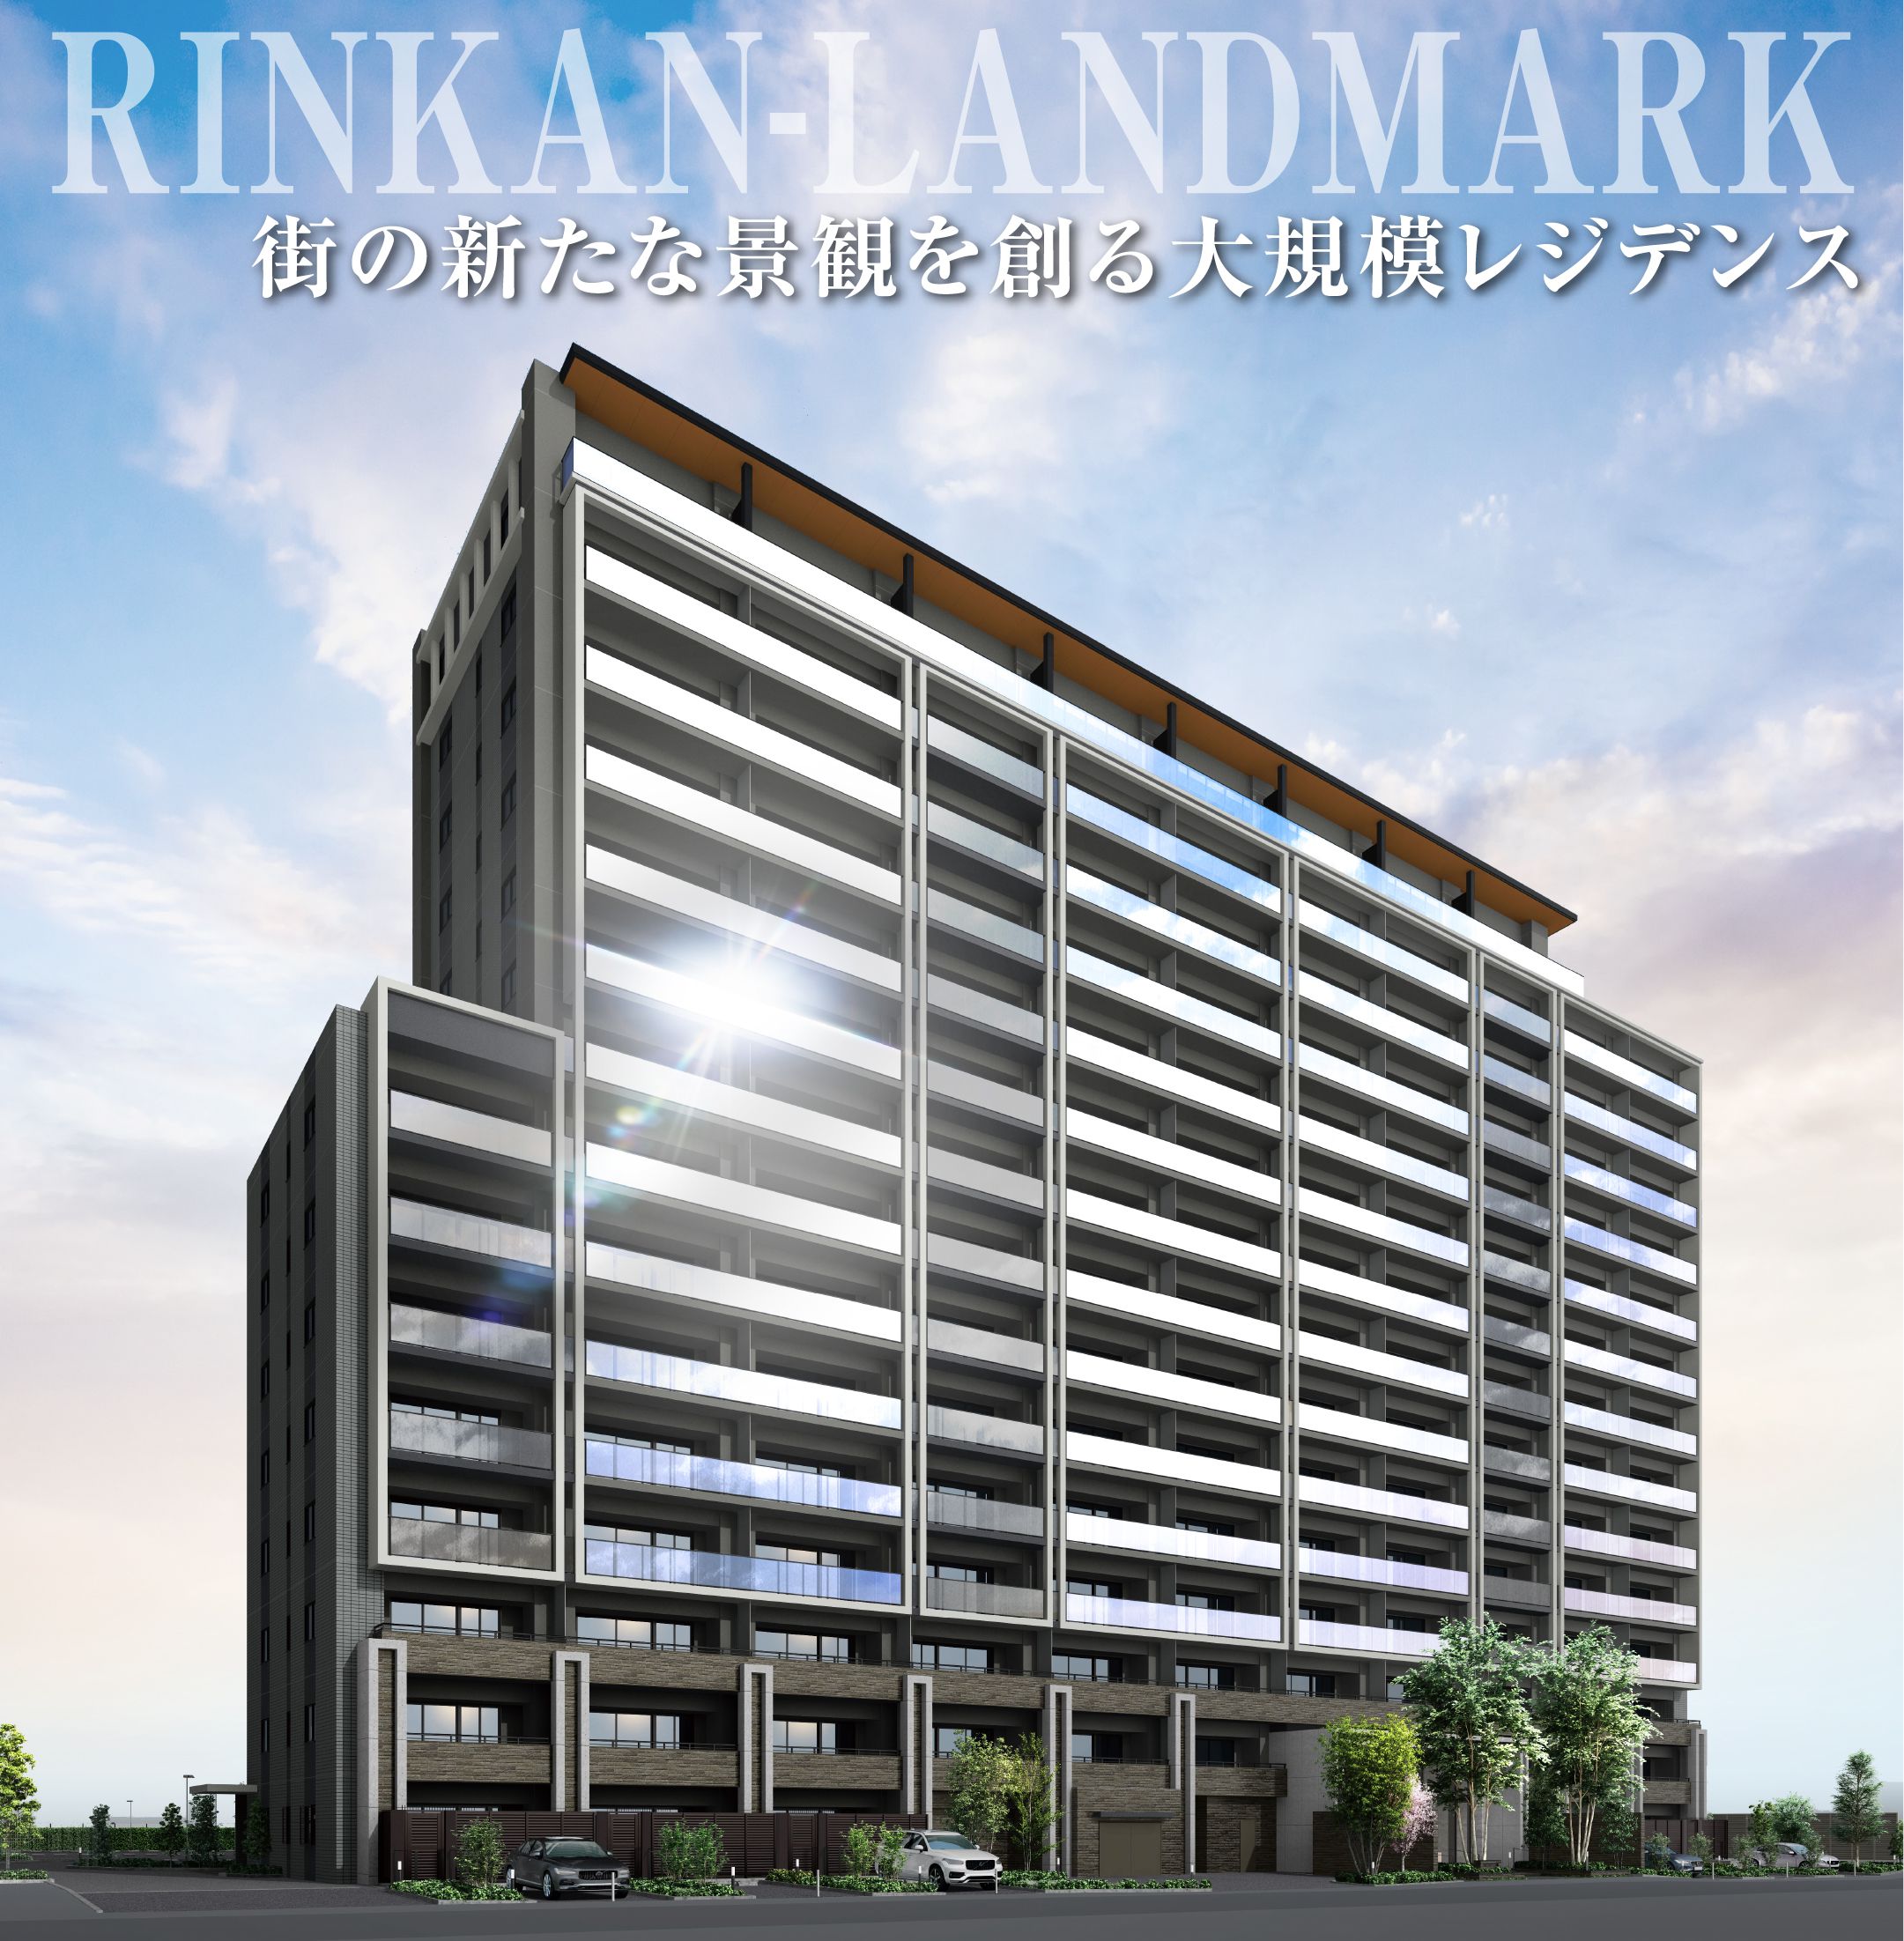 RINKAN-LANDMARK 街の新たな景観を創る大規模レジデンス